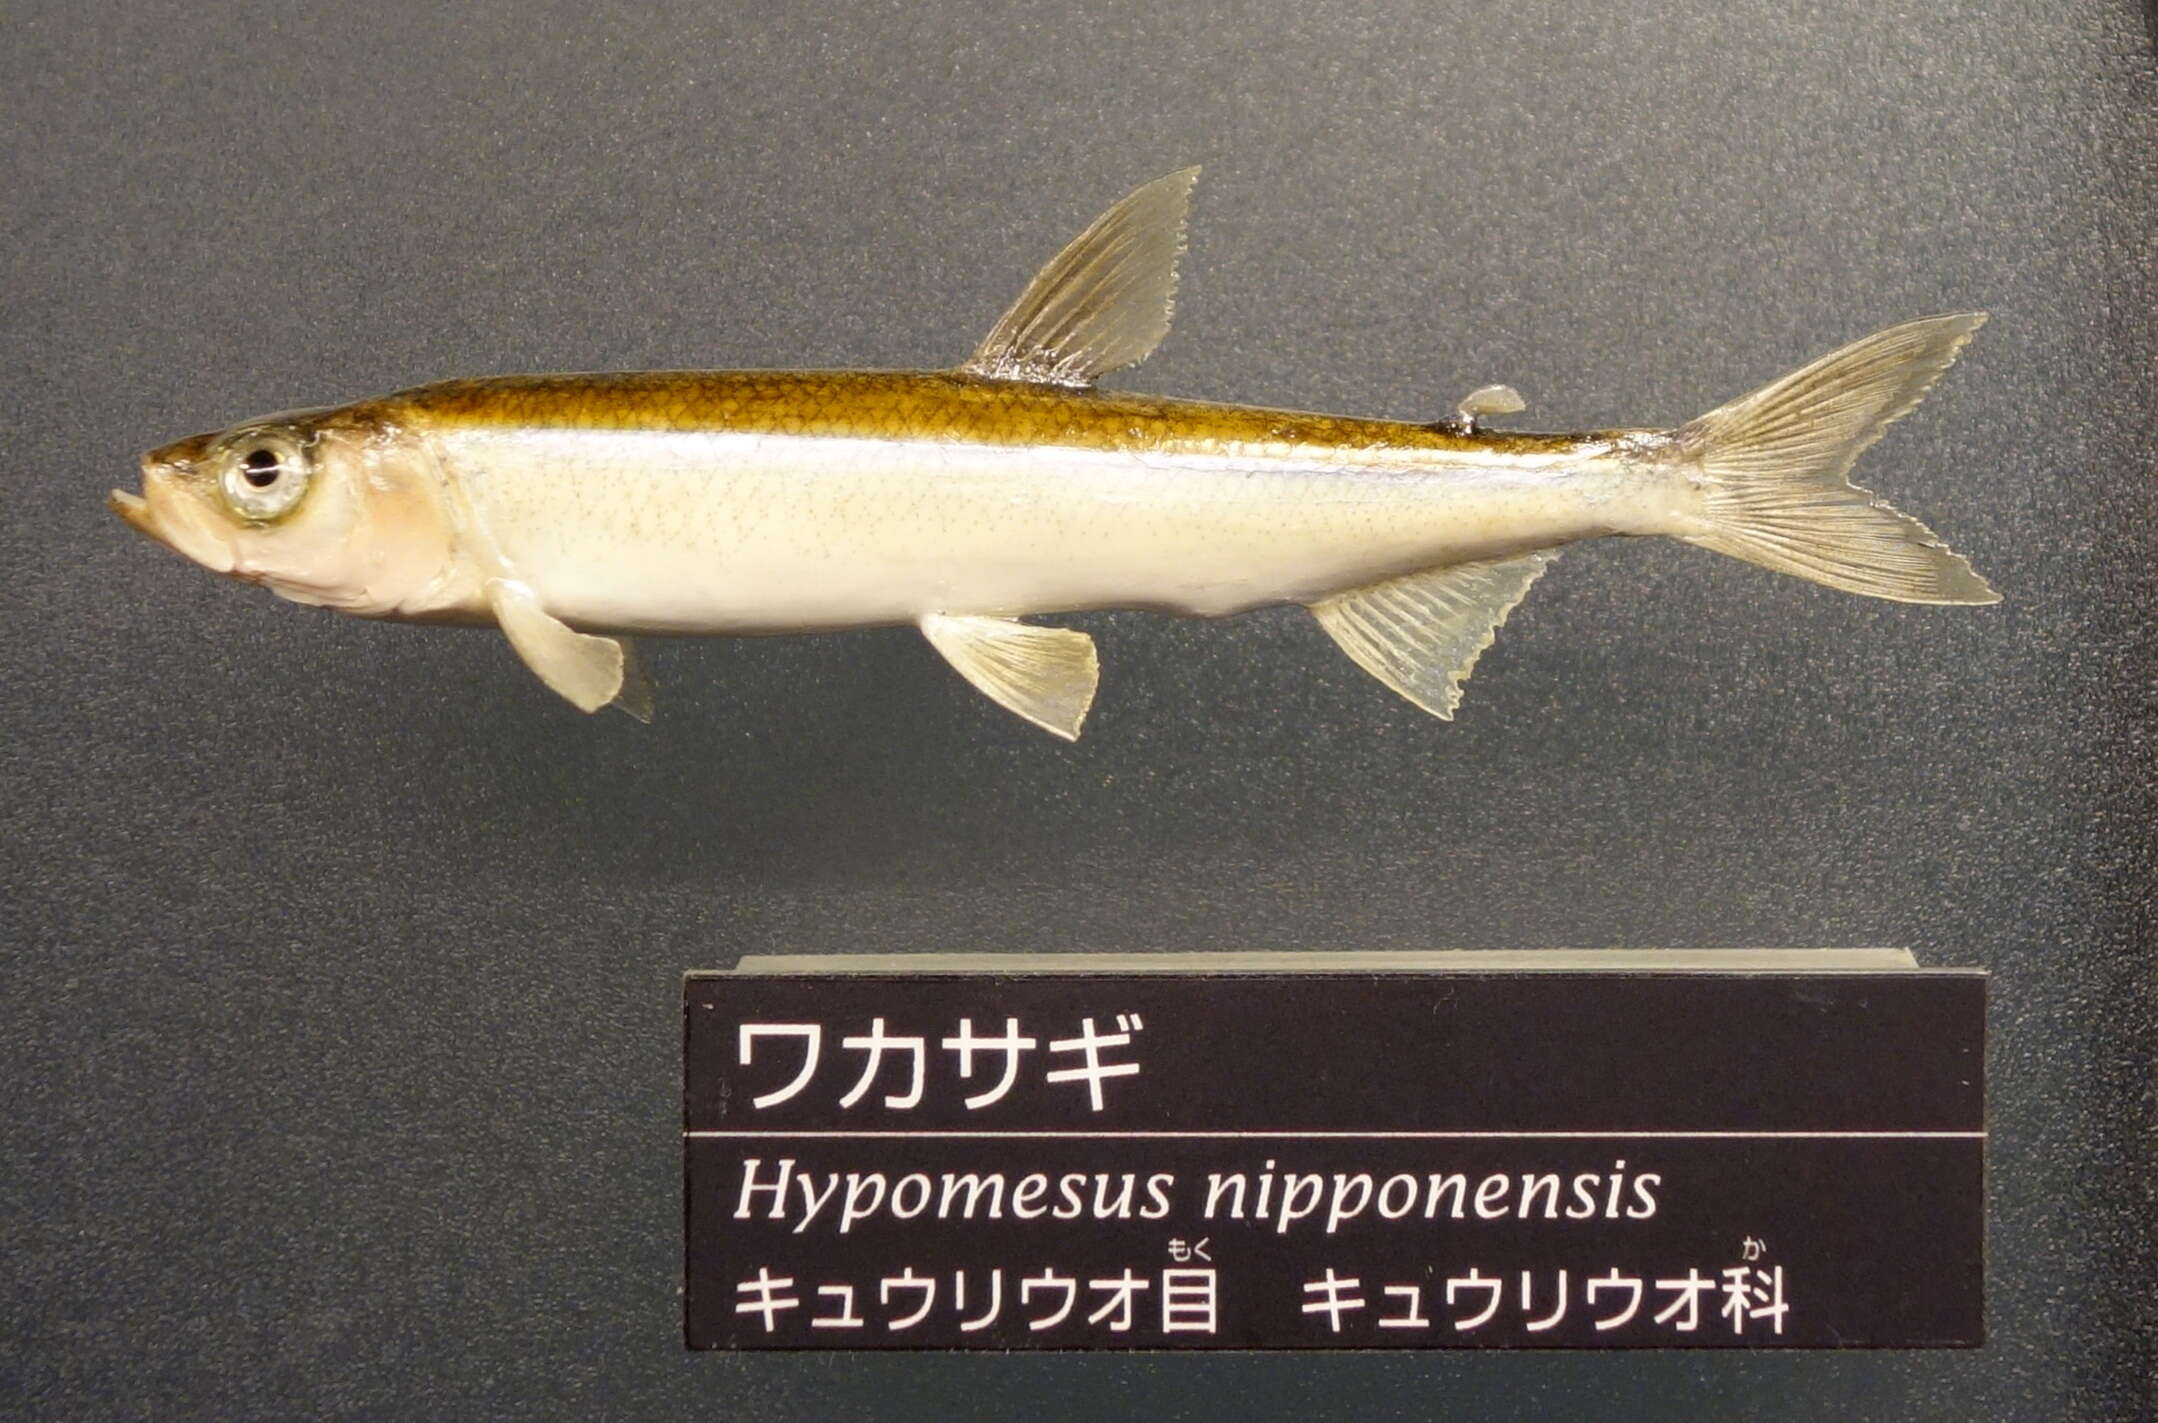 Hypomesus nipponensis McAllister 1963 resmi